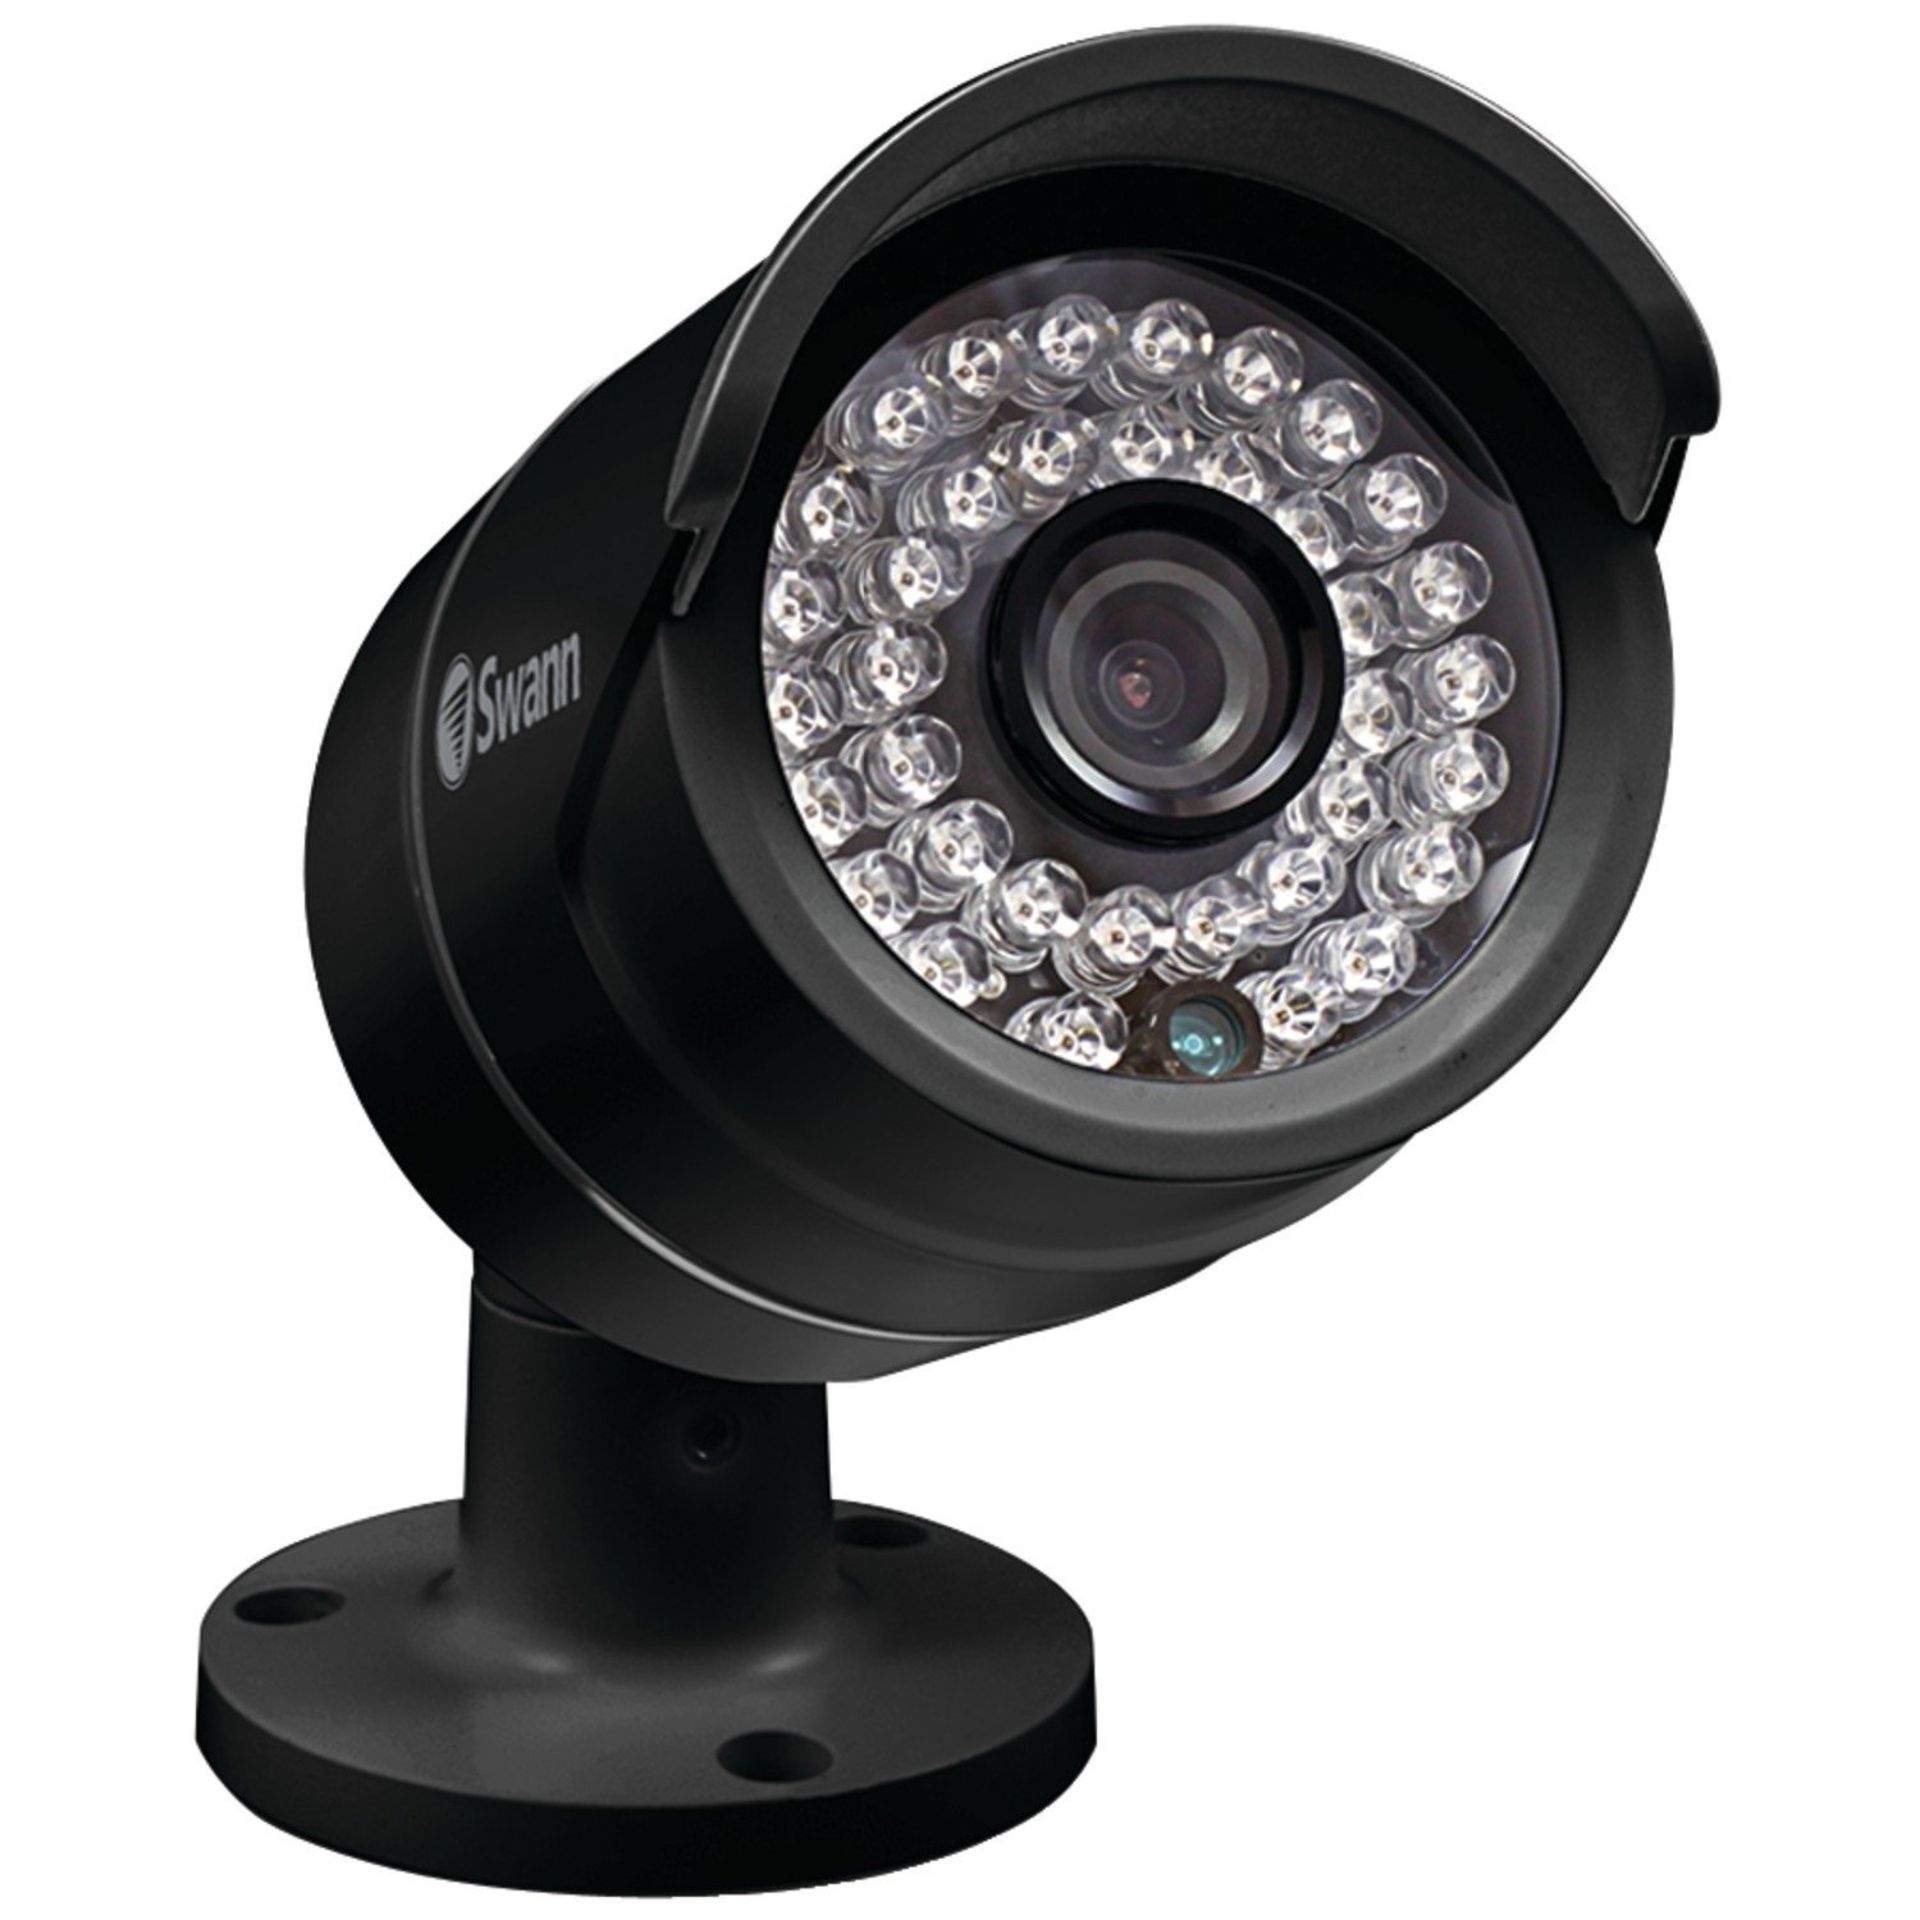 V Grade A Swann H850cam Security Camera - 720P HD - 30M Night Vision